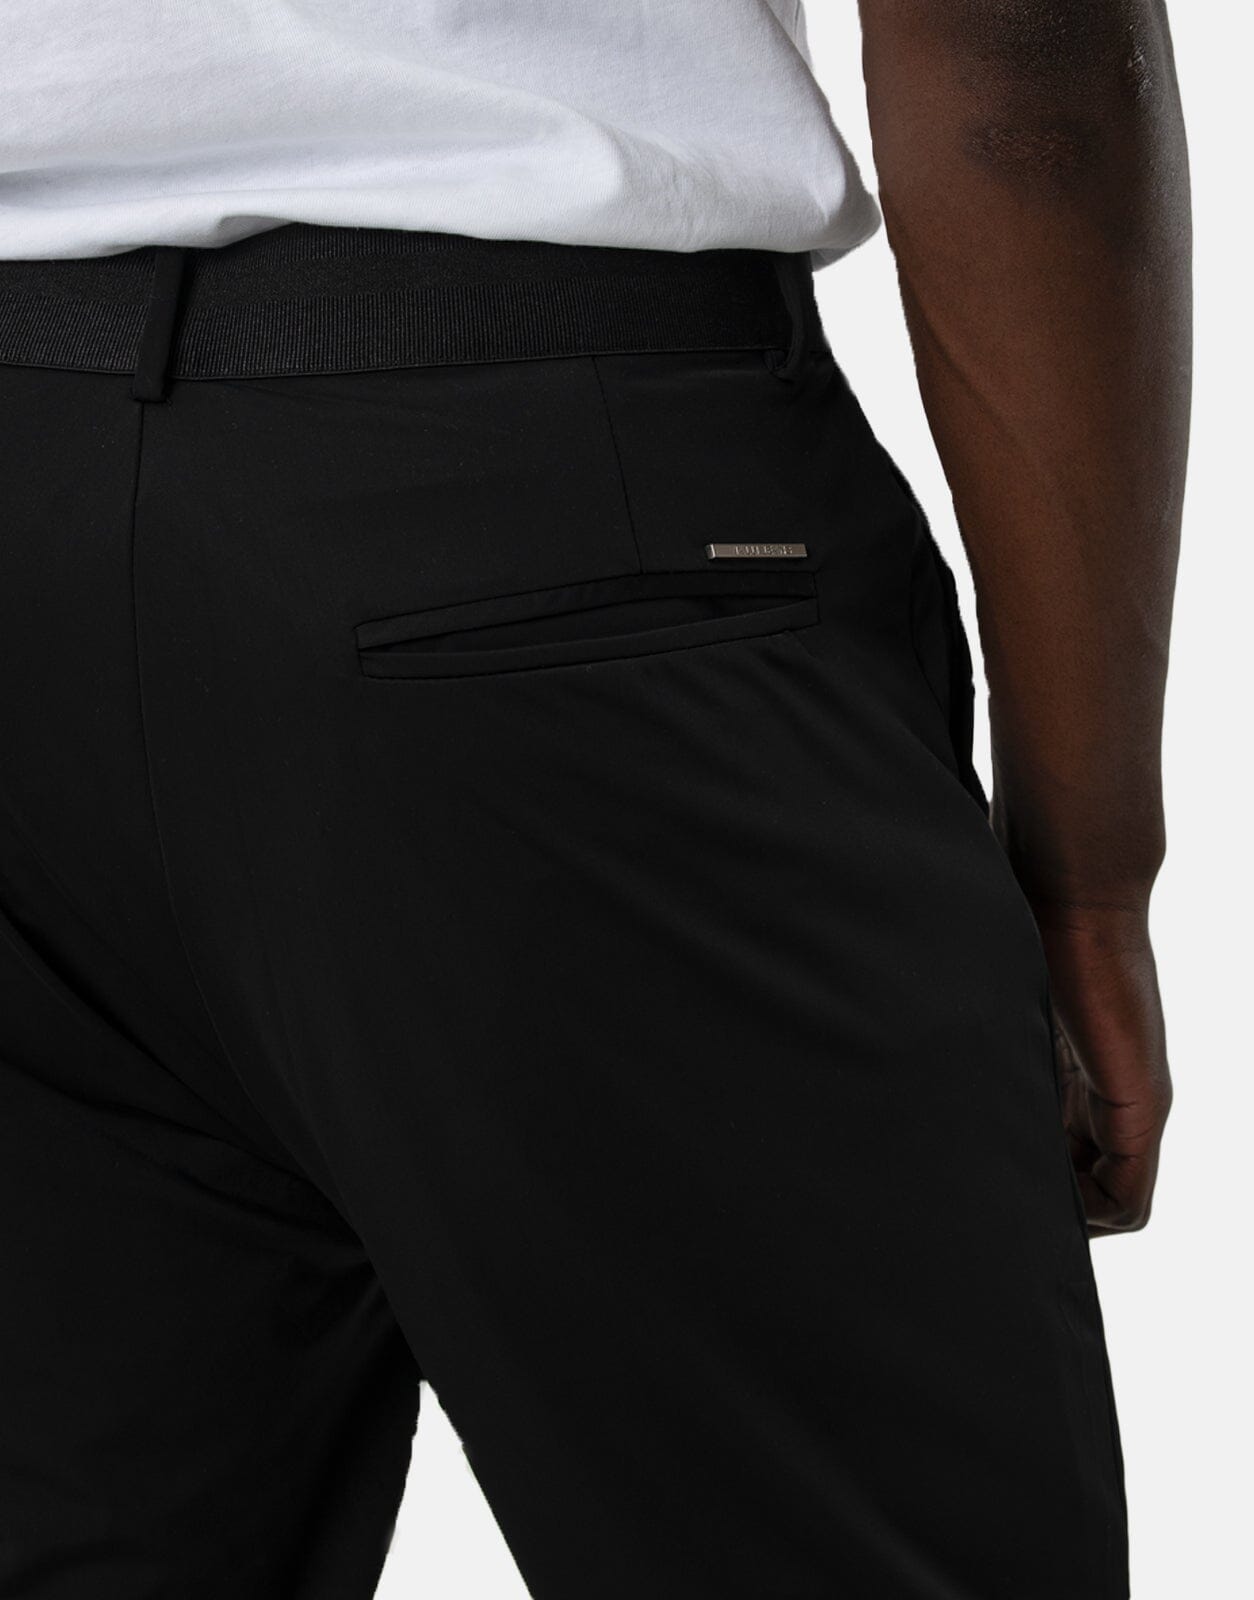 Vialli Chase Black Trouser - Subwear